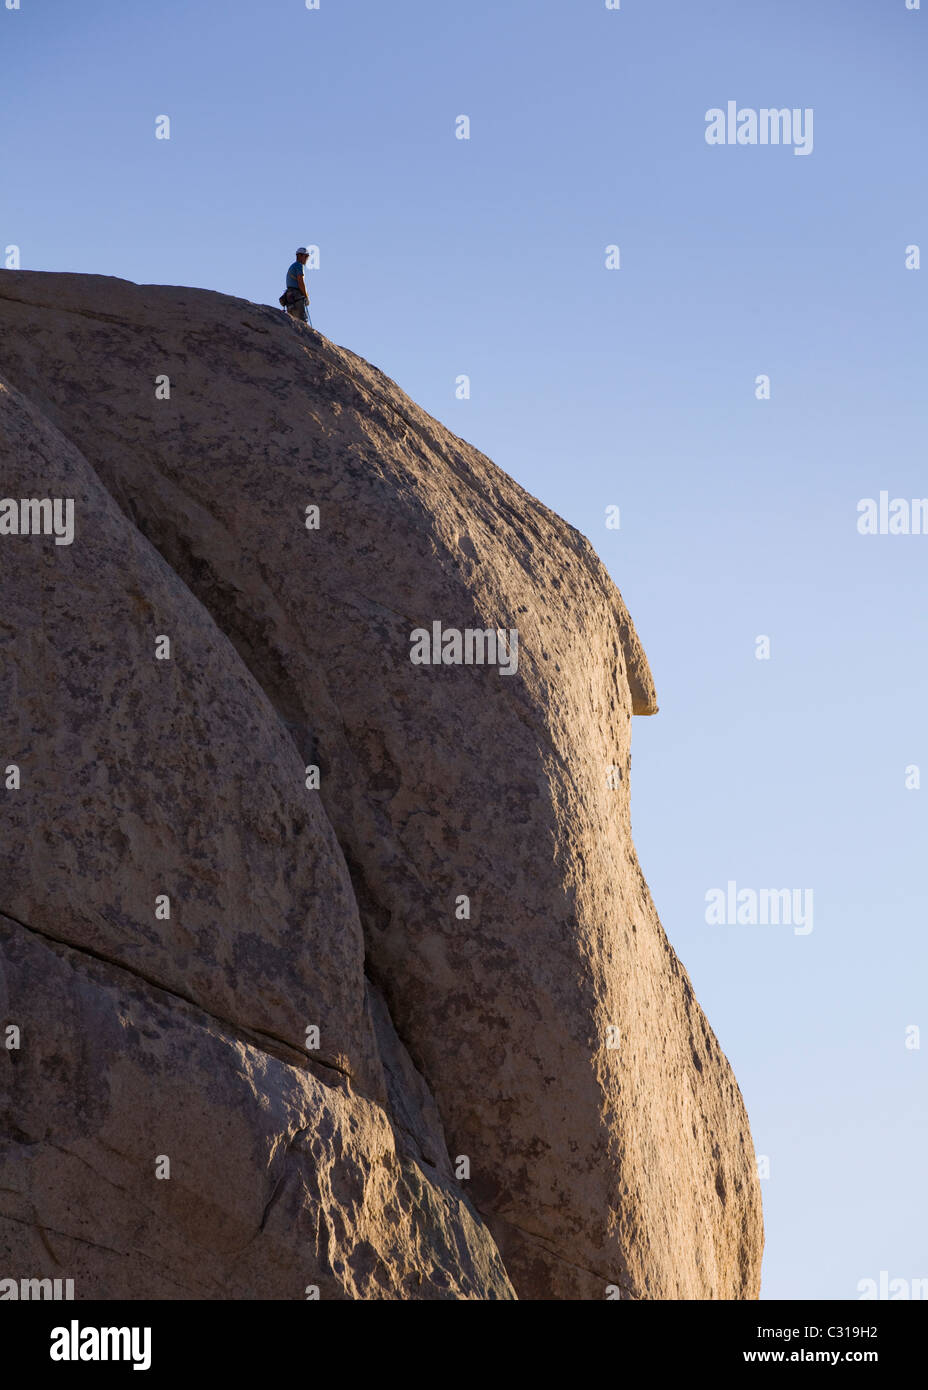 Stand am Anfang von großen Felsen Kletterer Stockfoto